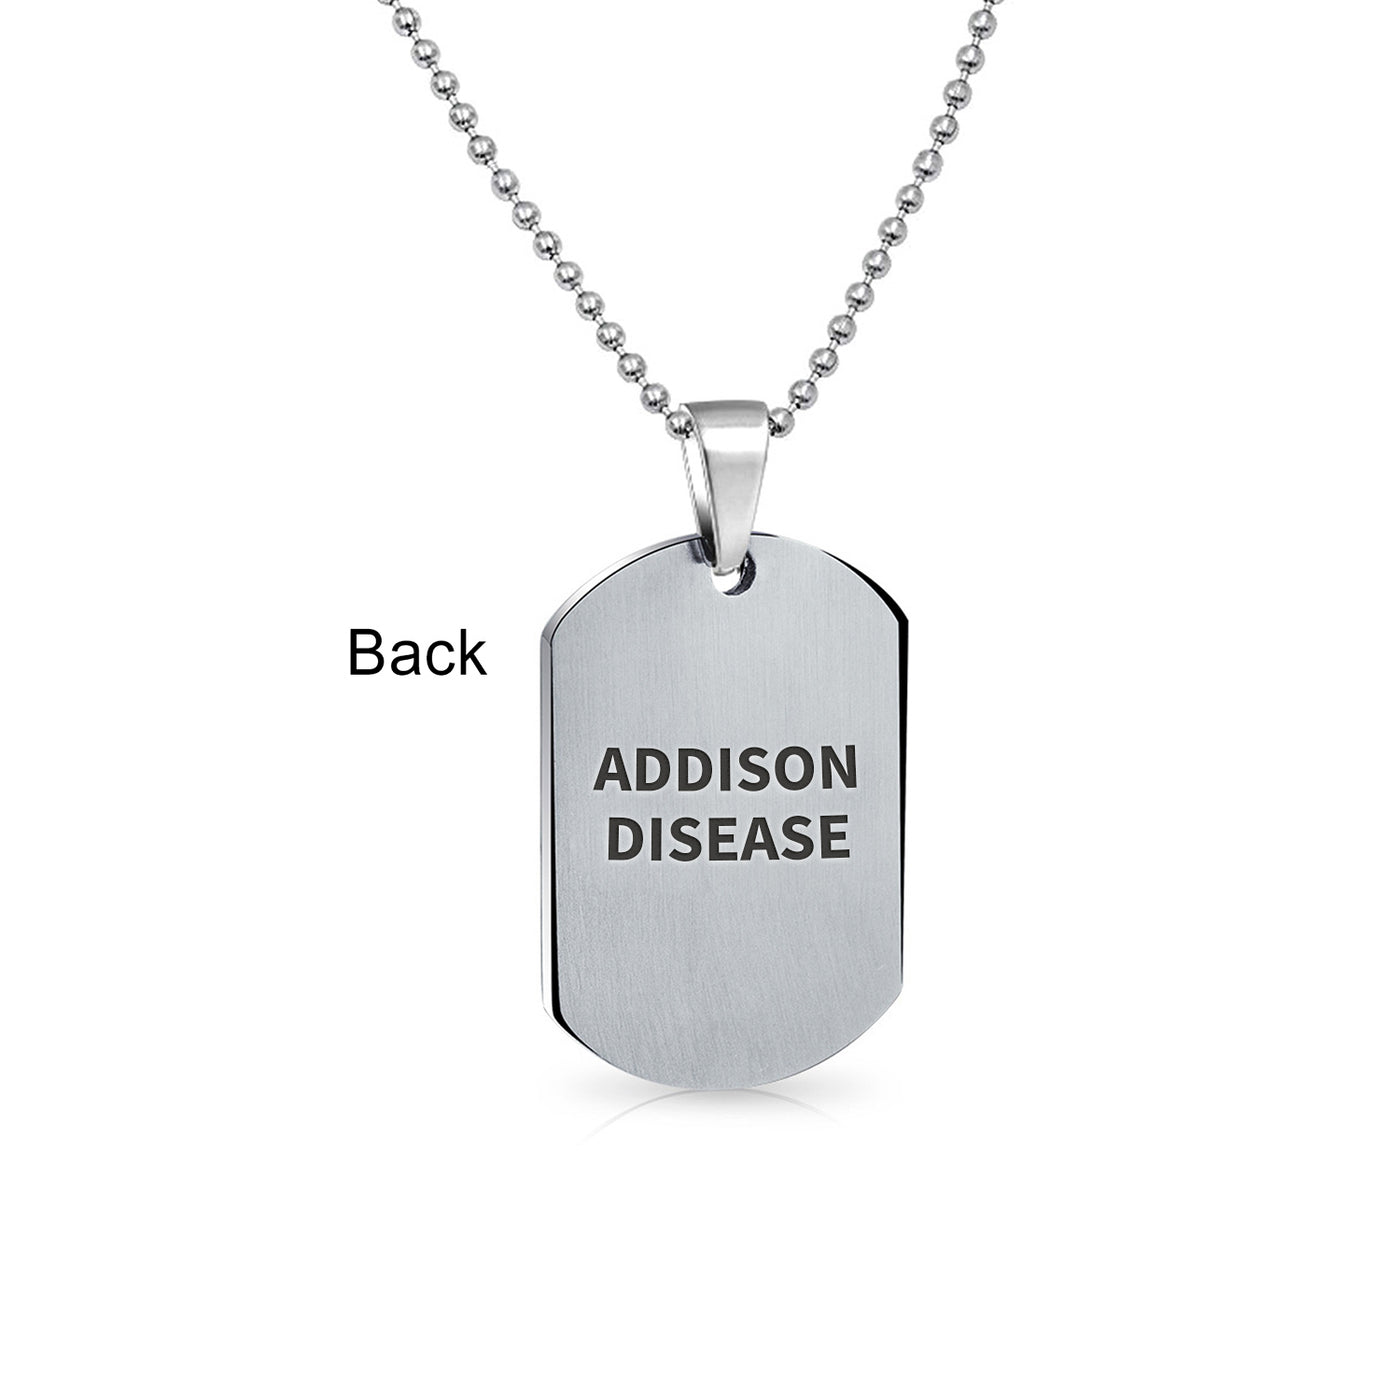 Addison Disease Small